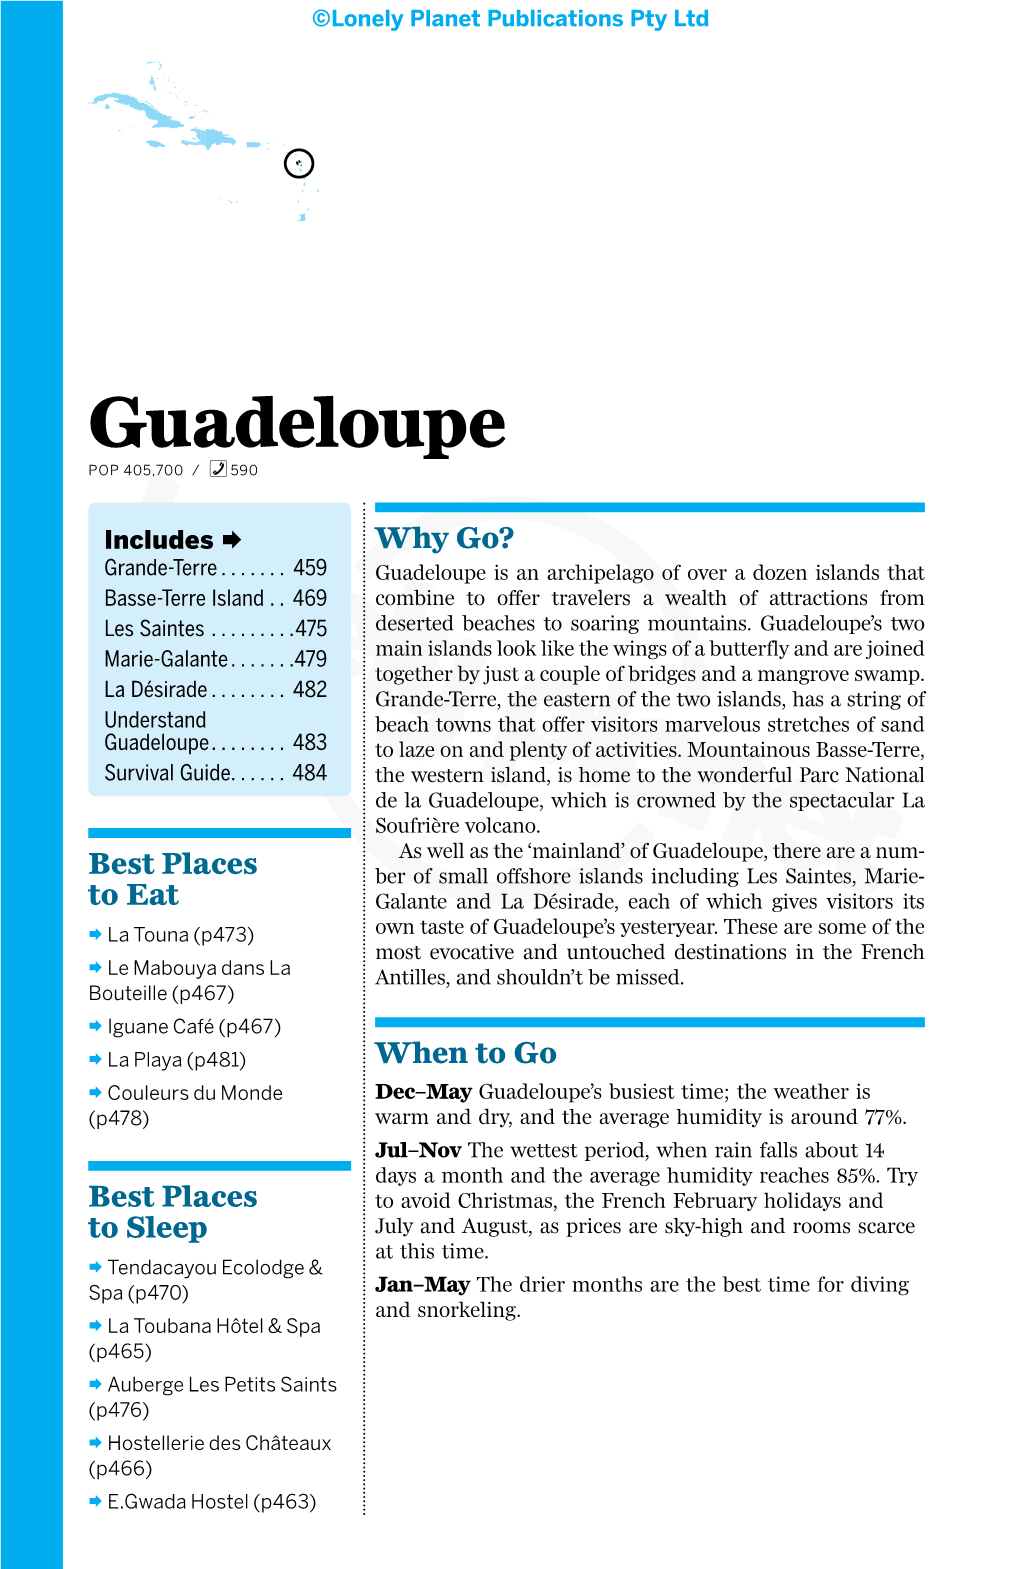 Guadeloupe% POP 405,700 / 590